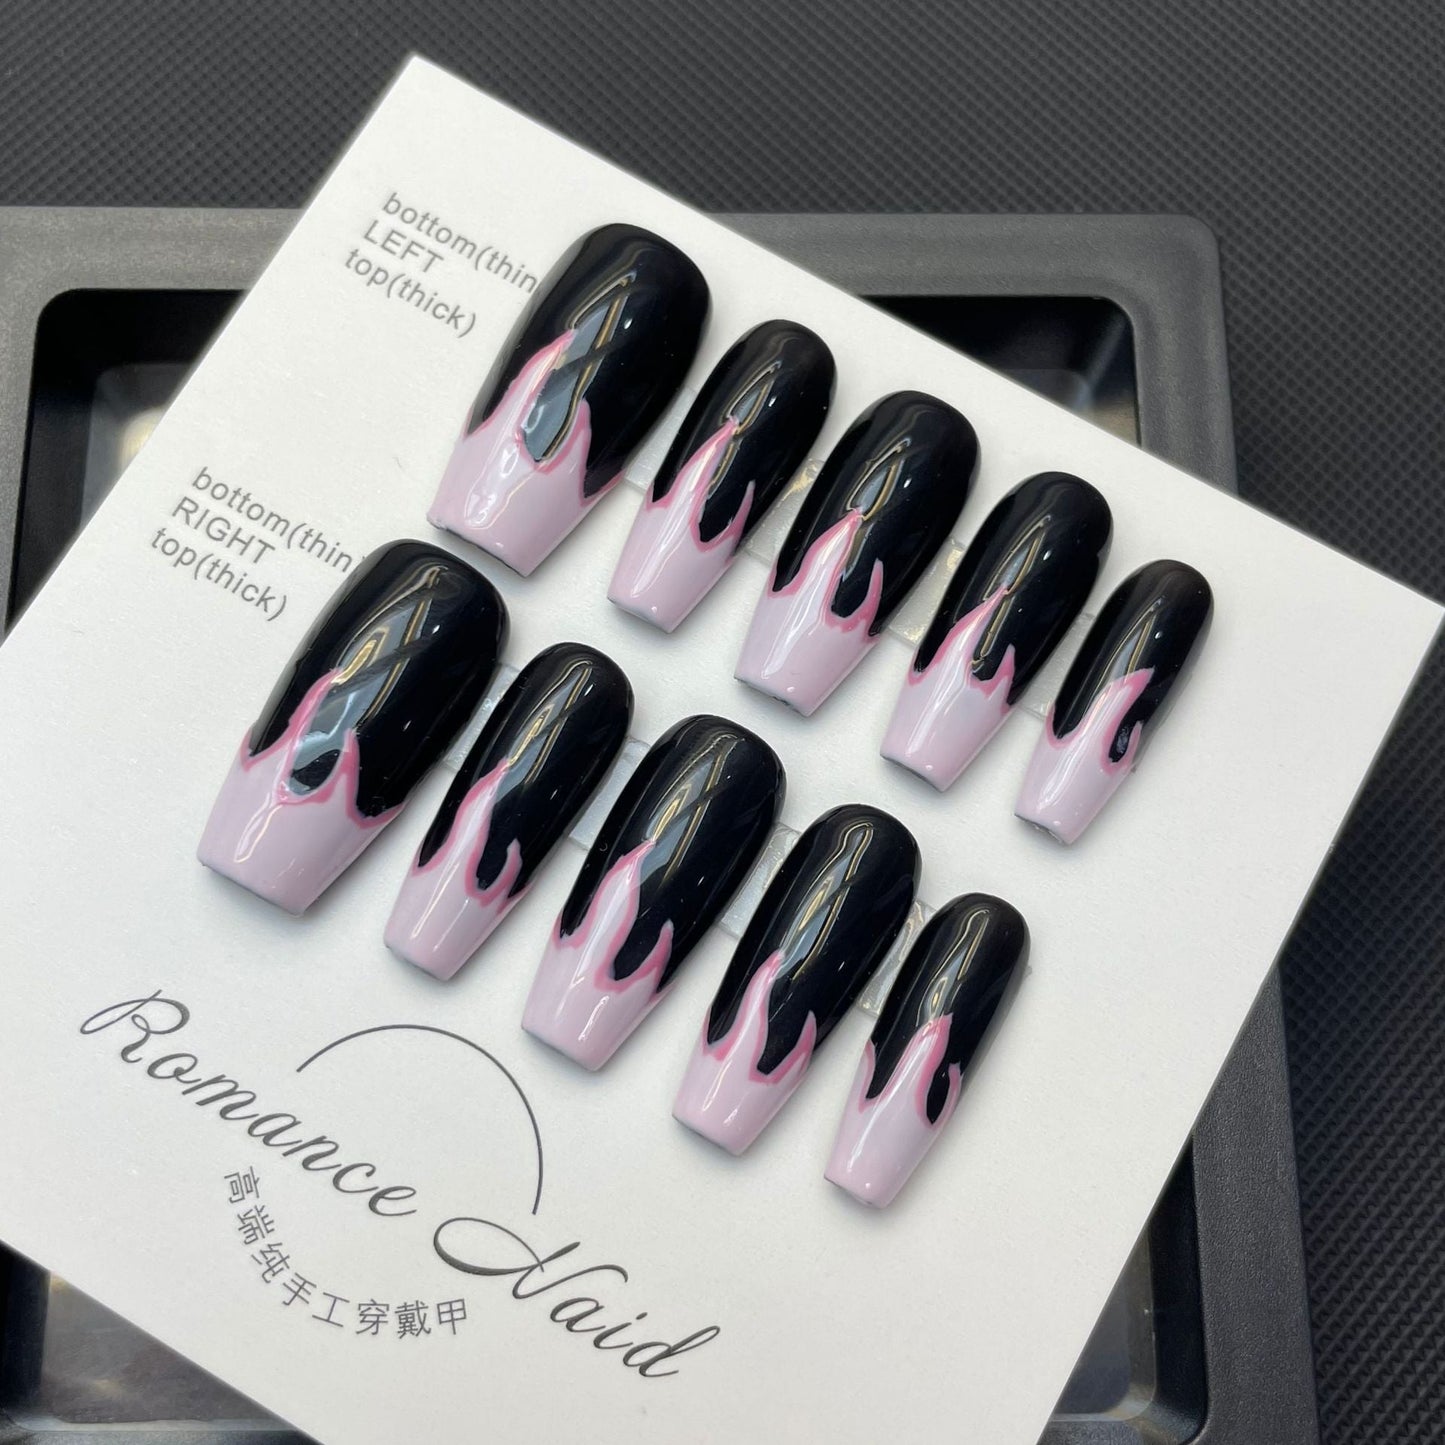 672 Night flames style press on nails 100% handmade false nails black pink